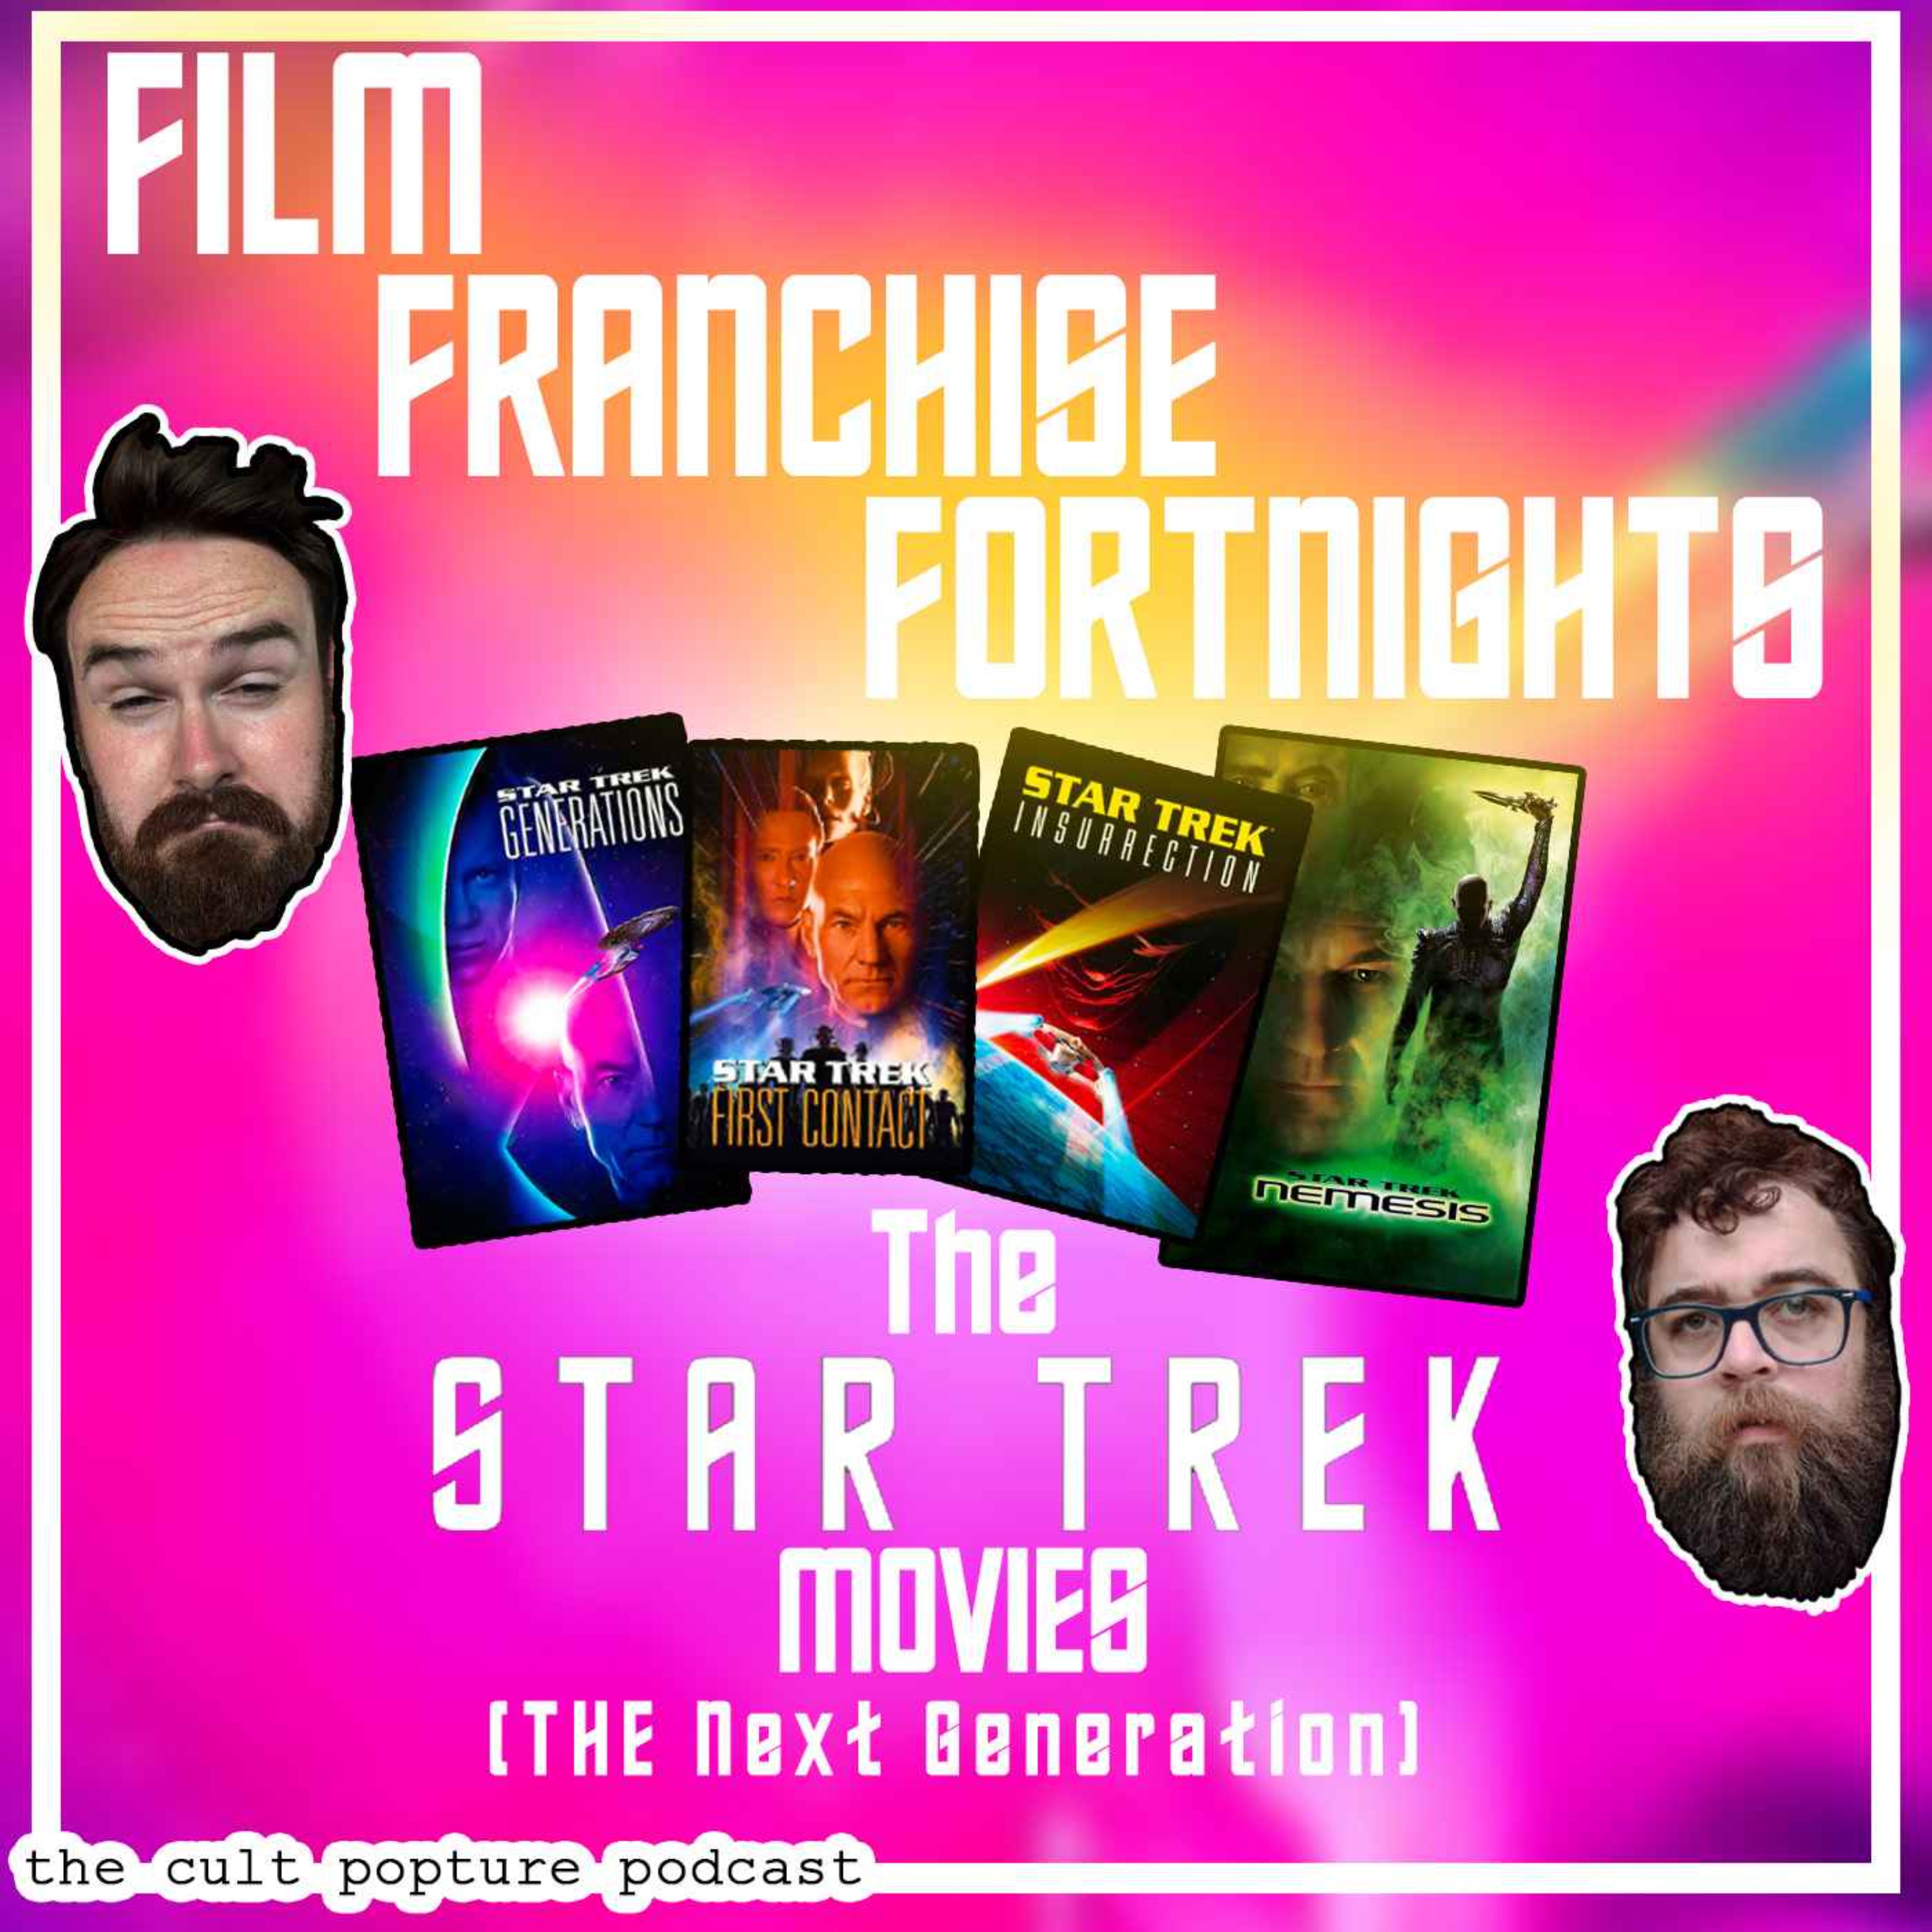 The ”Star Trek” Movies (The Next Generation) | Film Franchise Fortnights